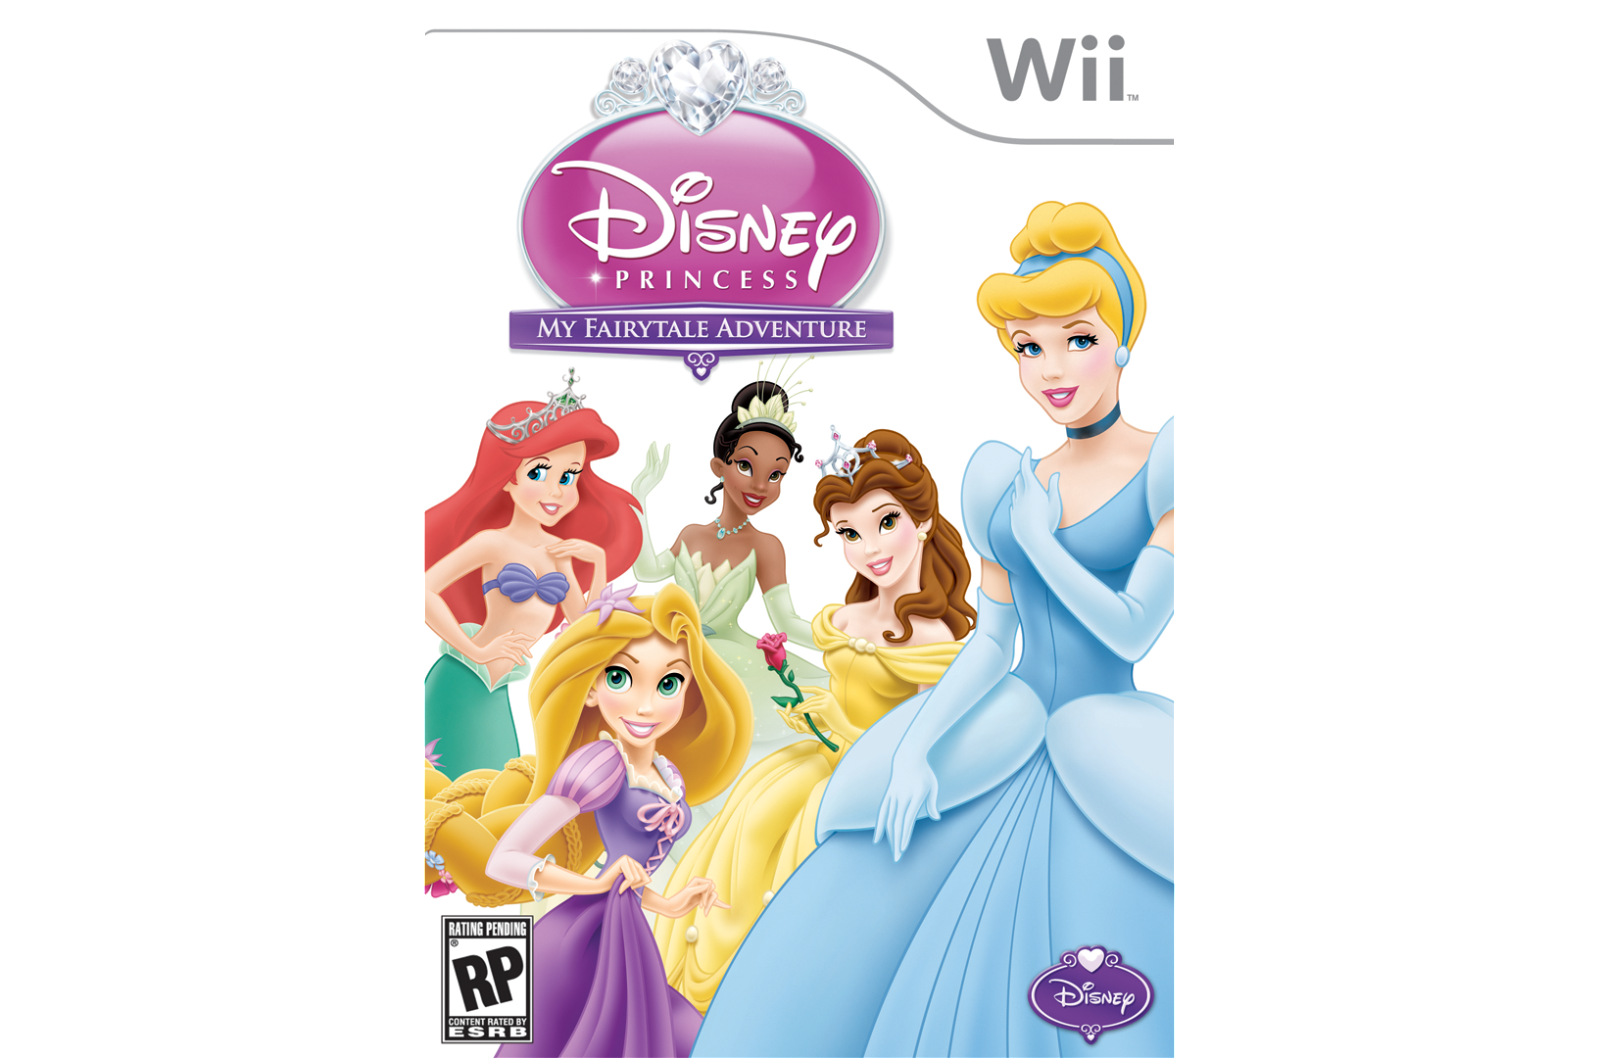 НОВАЯ игра "Disney Princess - Мои сказочные приключения"  Disney-princess-my-faitytale-adventure-nintendo-wii-videojuego-videogame-juego-game-ariel-rapunzel-bella-cenicienta-tiana-tangled-little-mermaid-cinderella-belle-frog-princesas